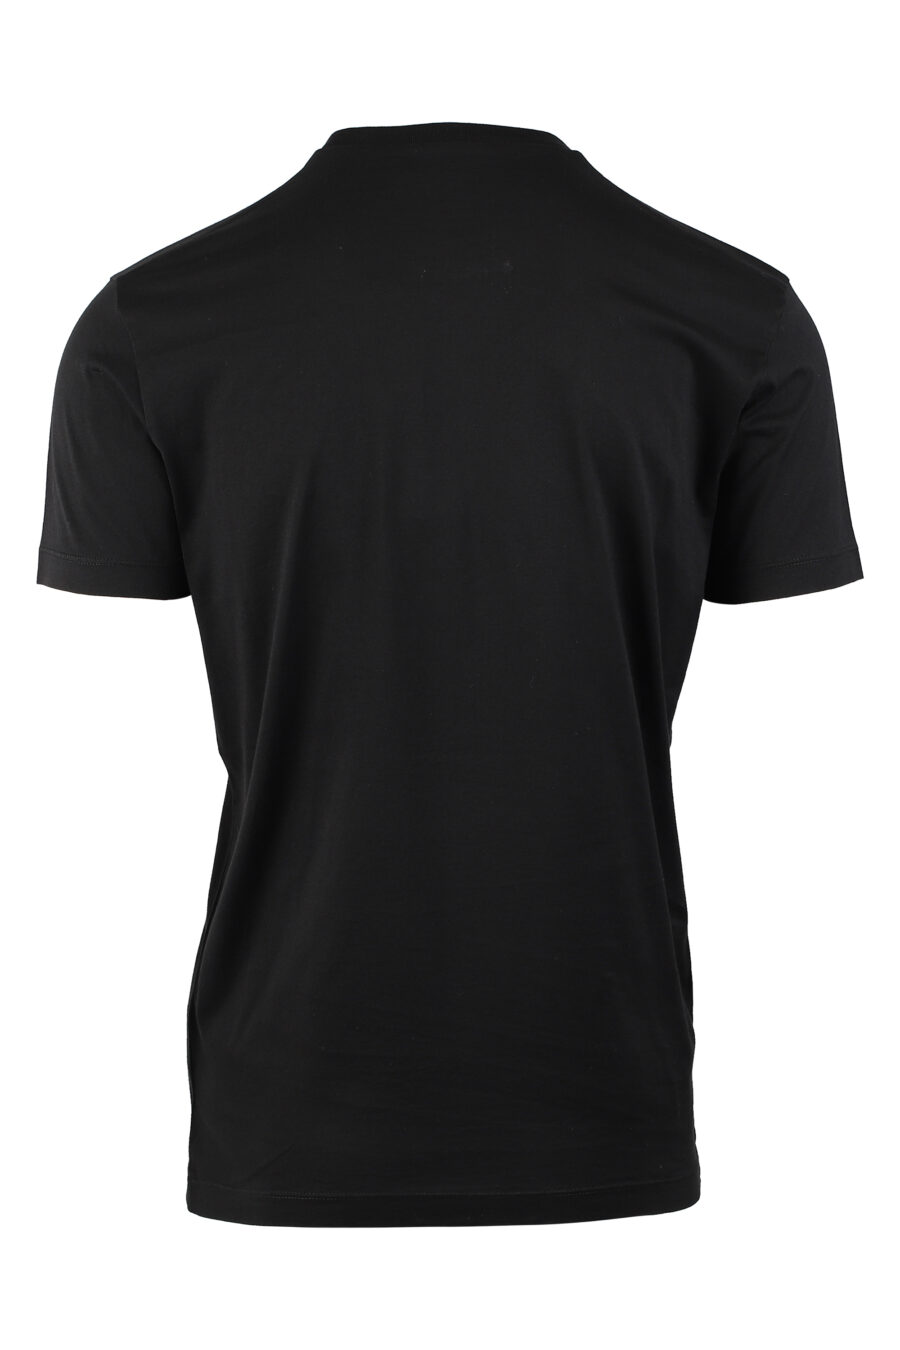 Camiseta negra con maxilogo gris y rojo "built tuff" - IMG 0541